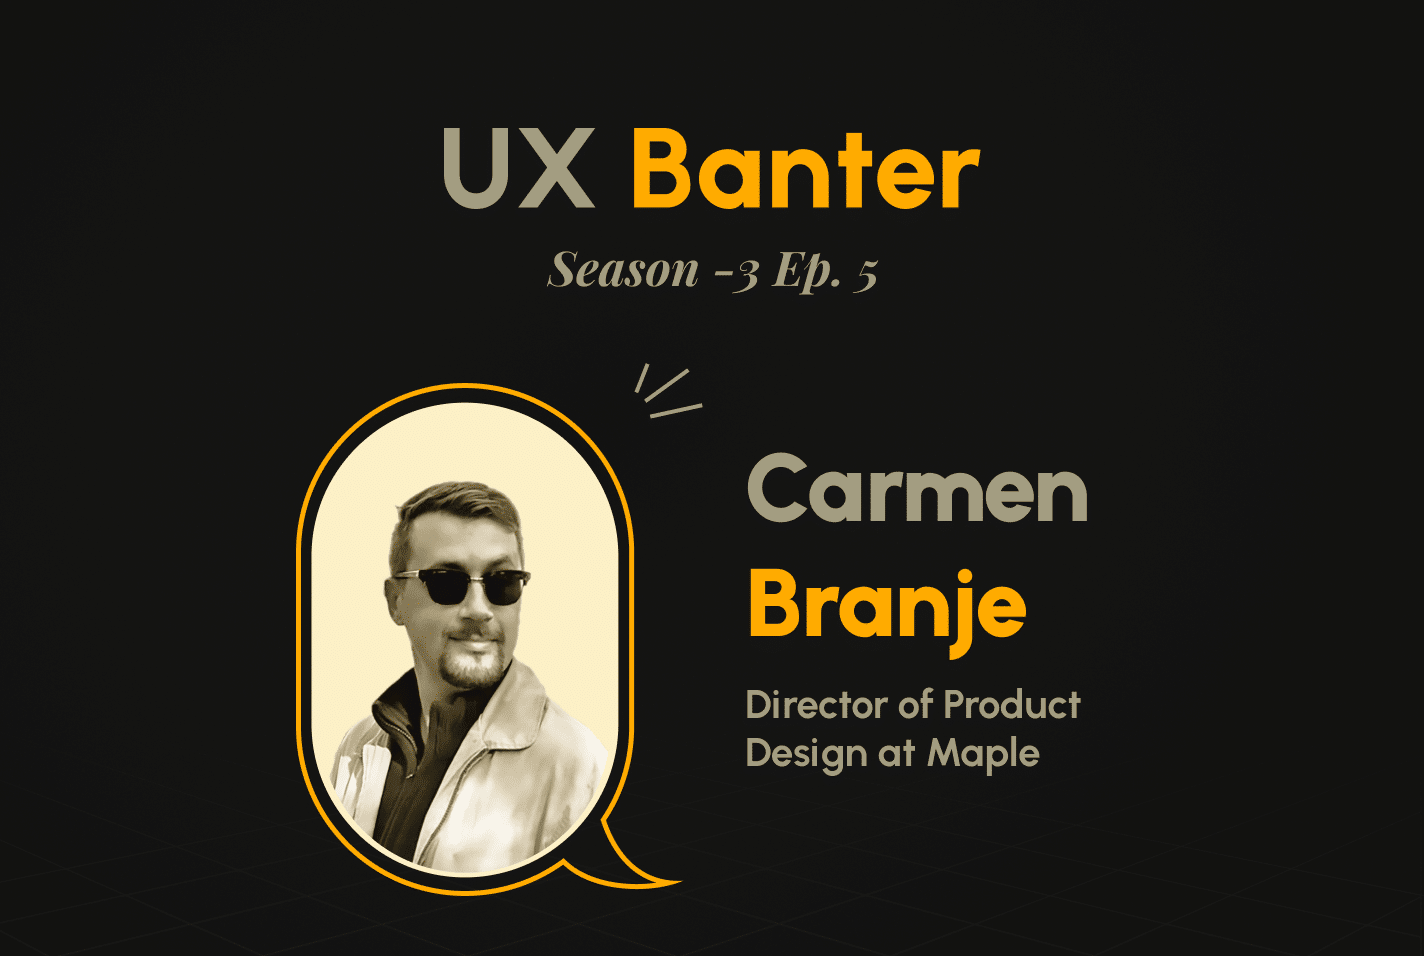 UX Banter Season 3: Episode 5 with Carmen Branje